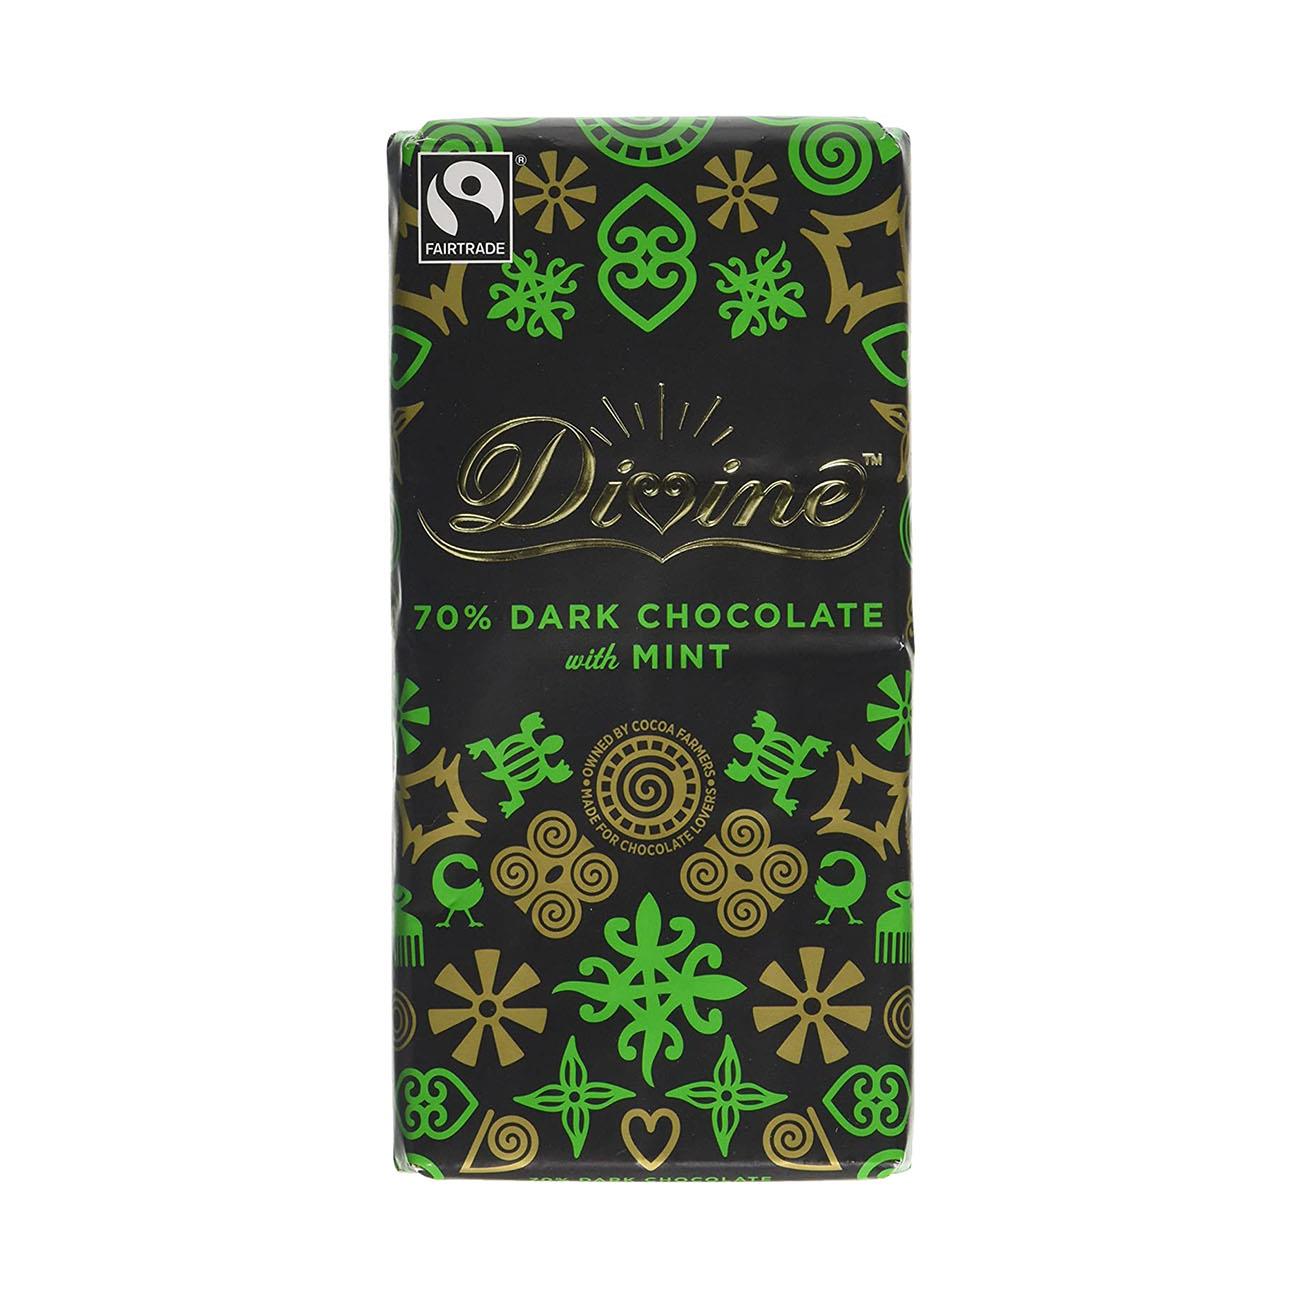 70% Dark Chocolate with Mint Bar 90g